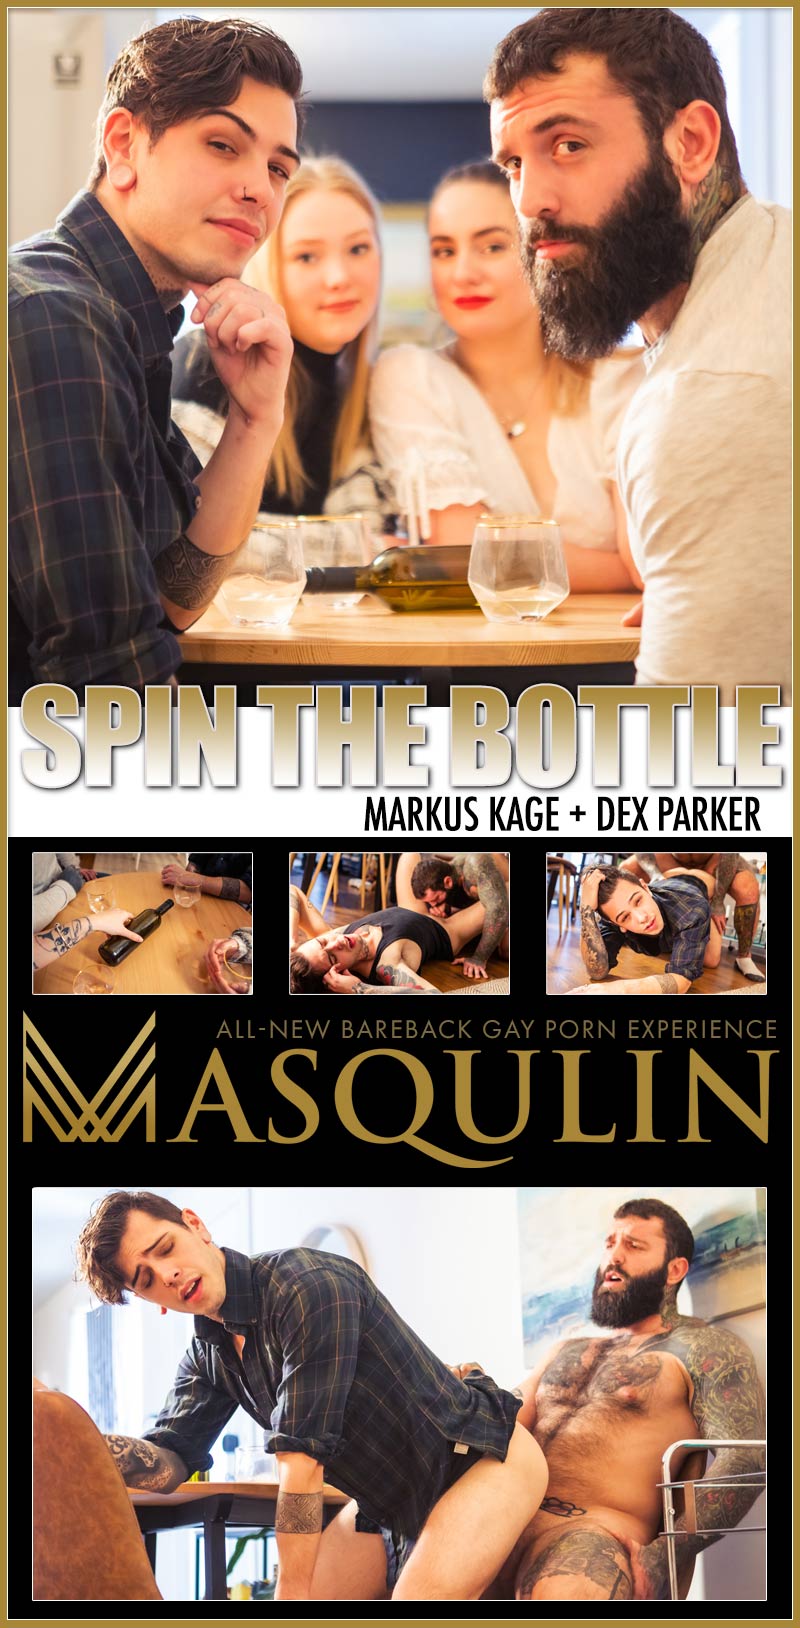 Spin The Bottle (Markus Kage Fucks Dex Parker) on MASQULIN